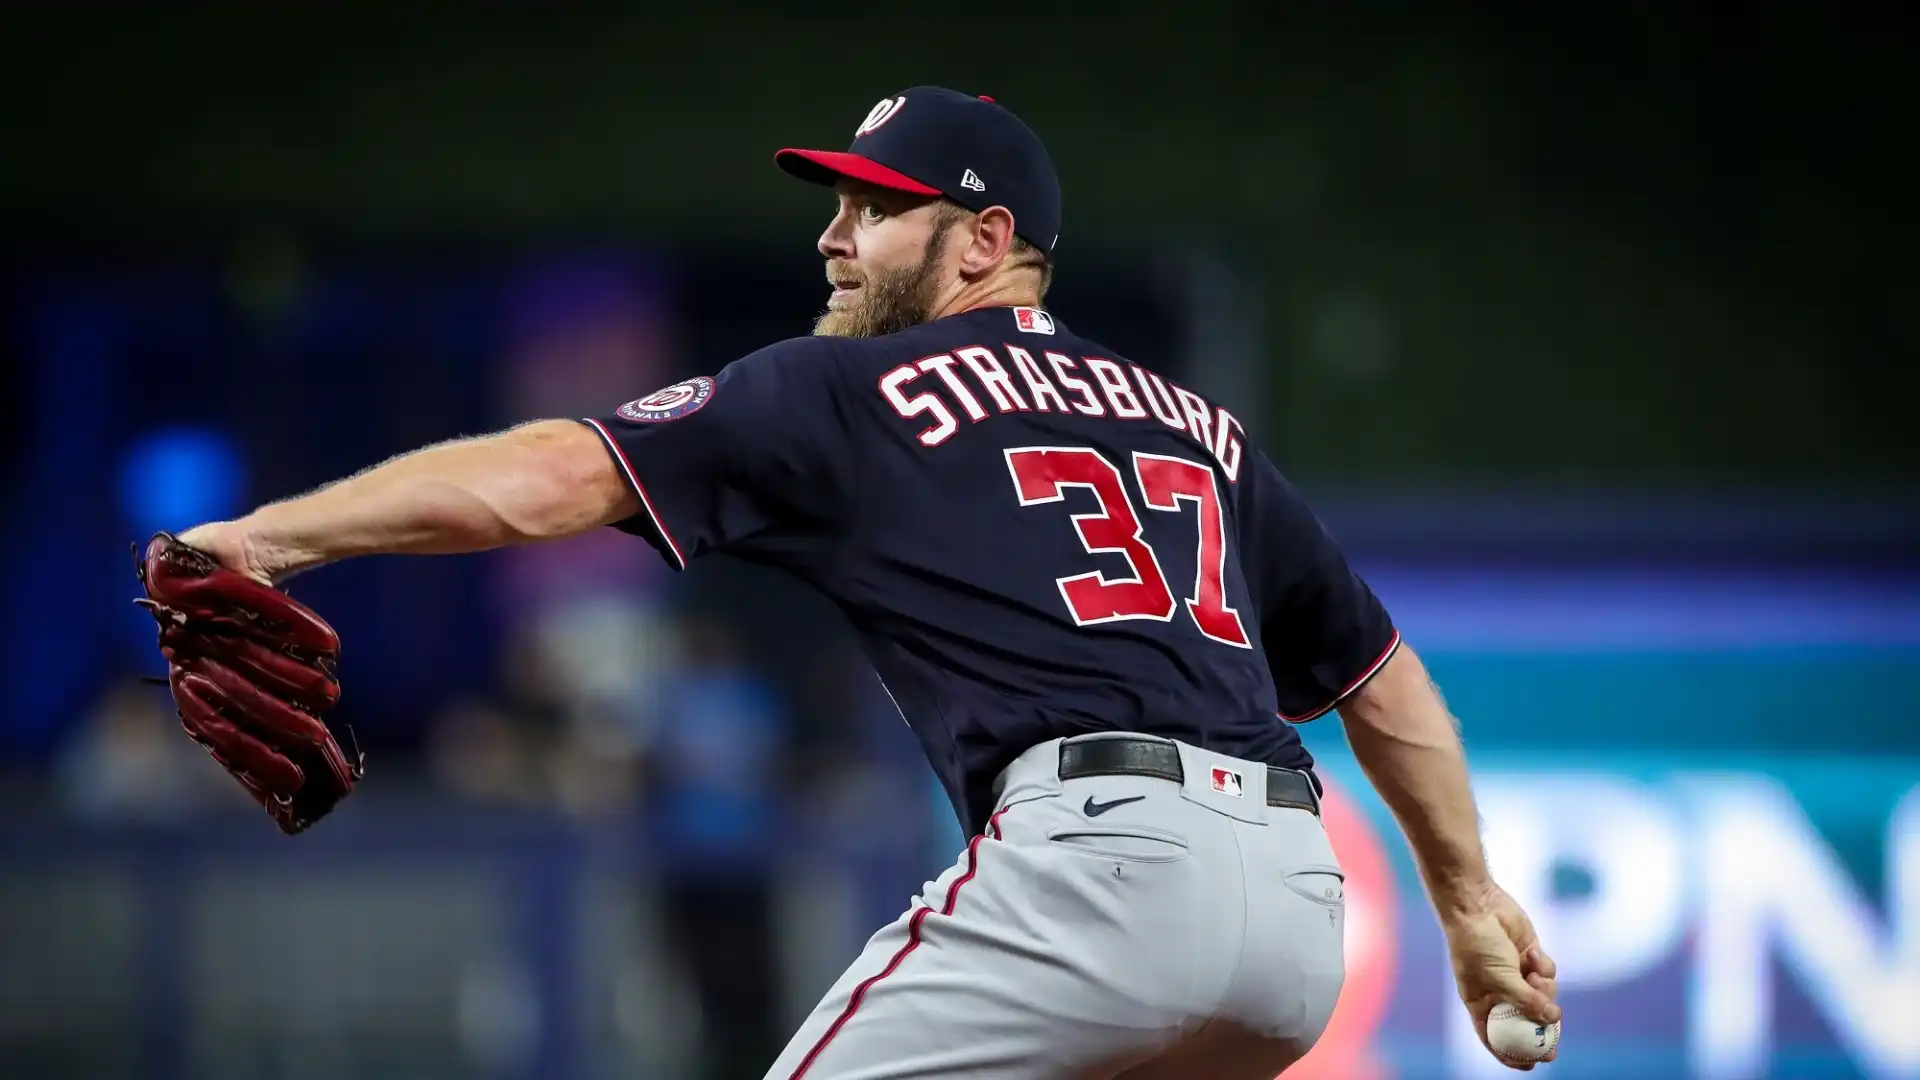 10 Stephen Strasburg (Stati Uniti, Washington Nationals): 33,8 milioni di dollari (stipendio 33,6 milioni, sponsorizzazioni 200mila dollari). 3 volte All-Star MLB